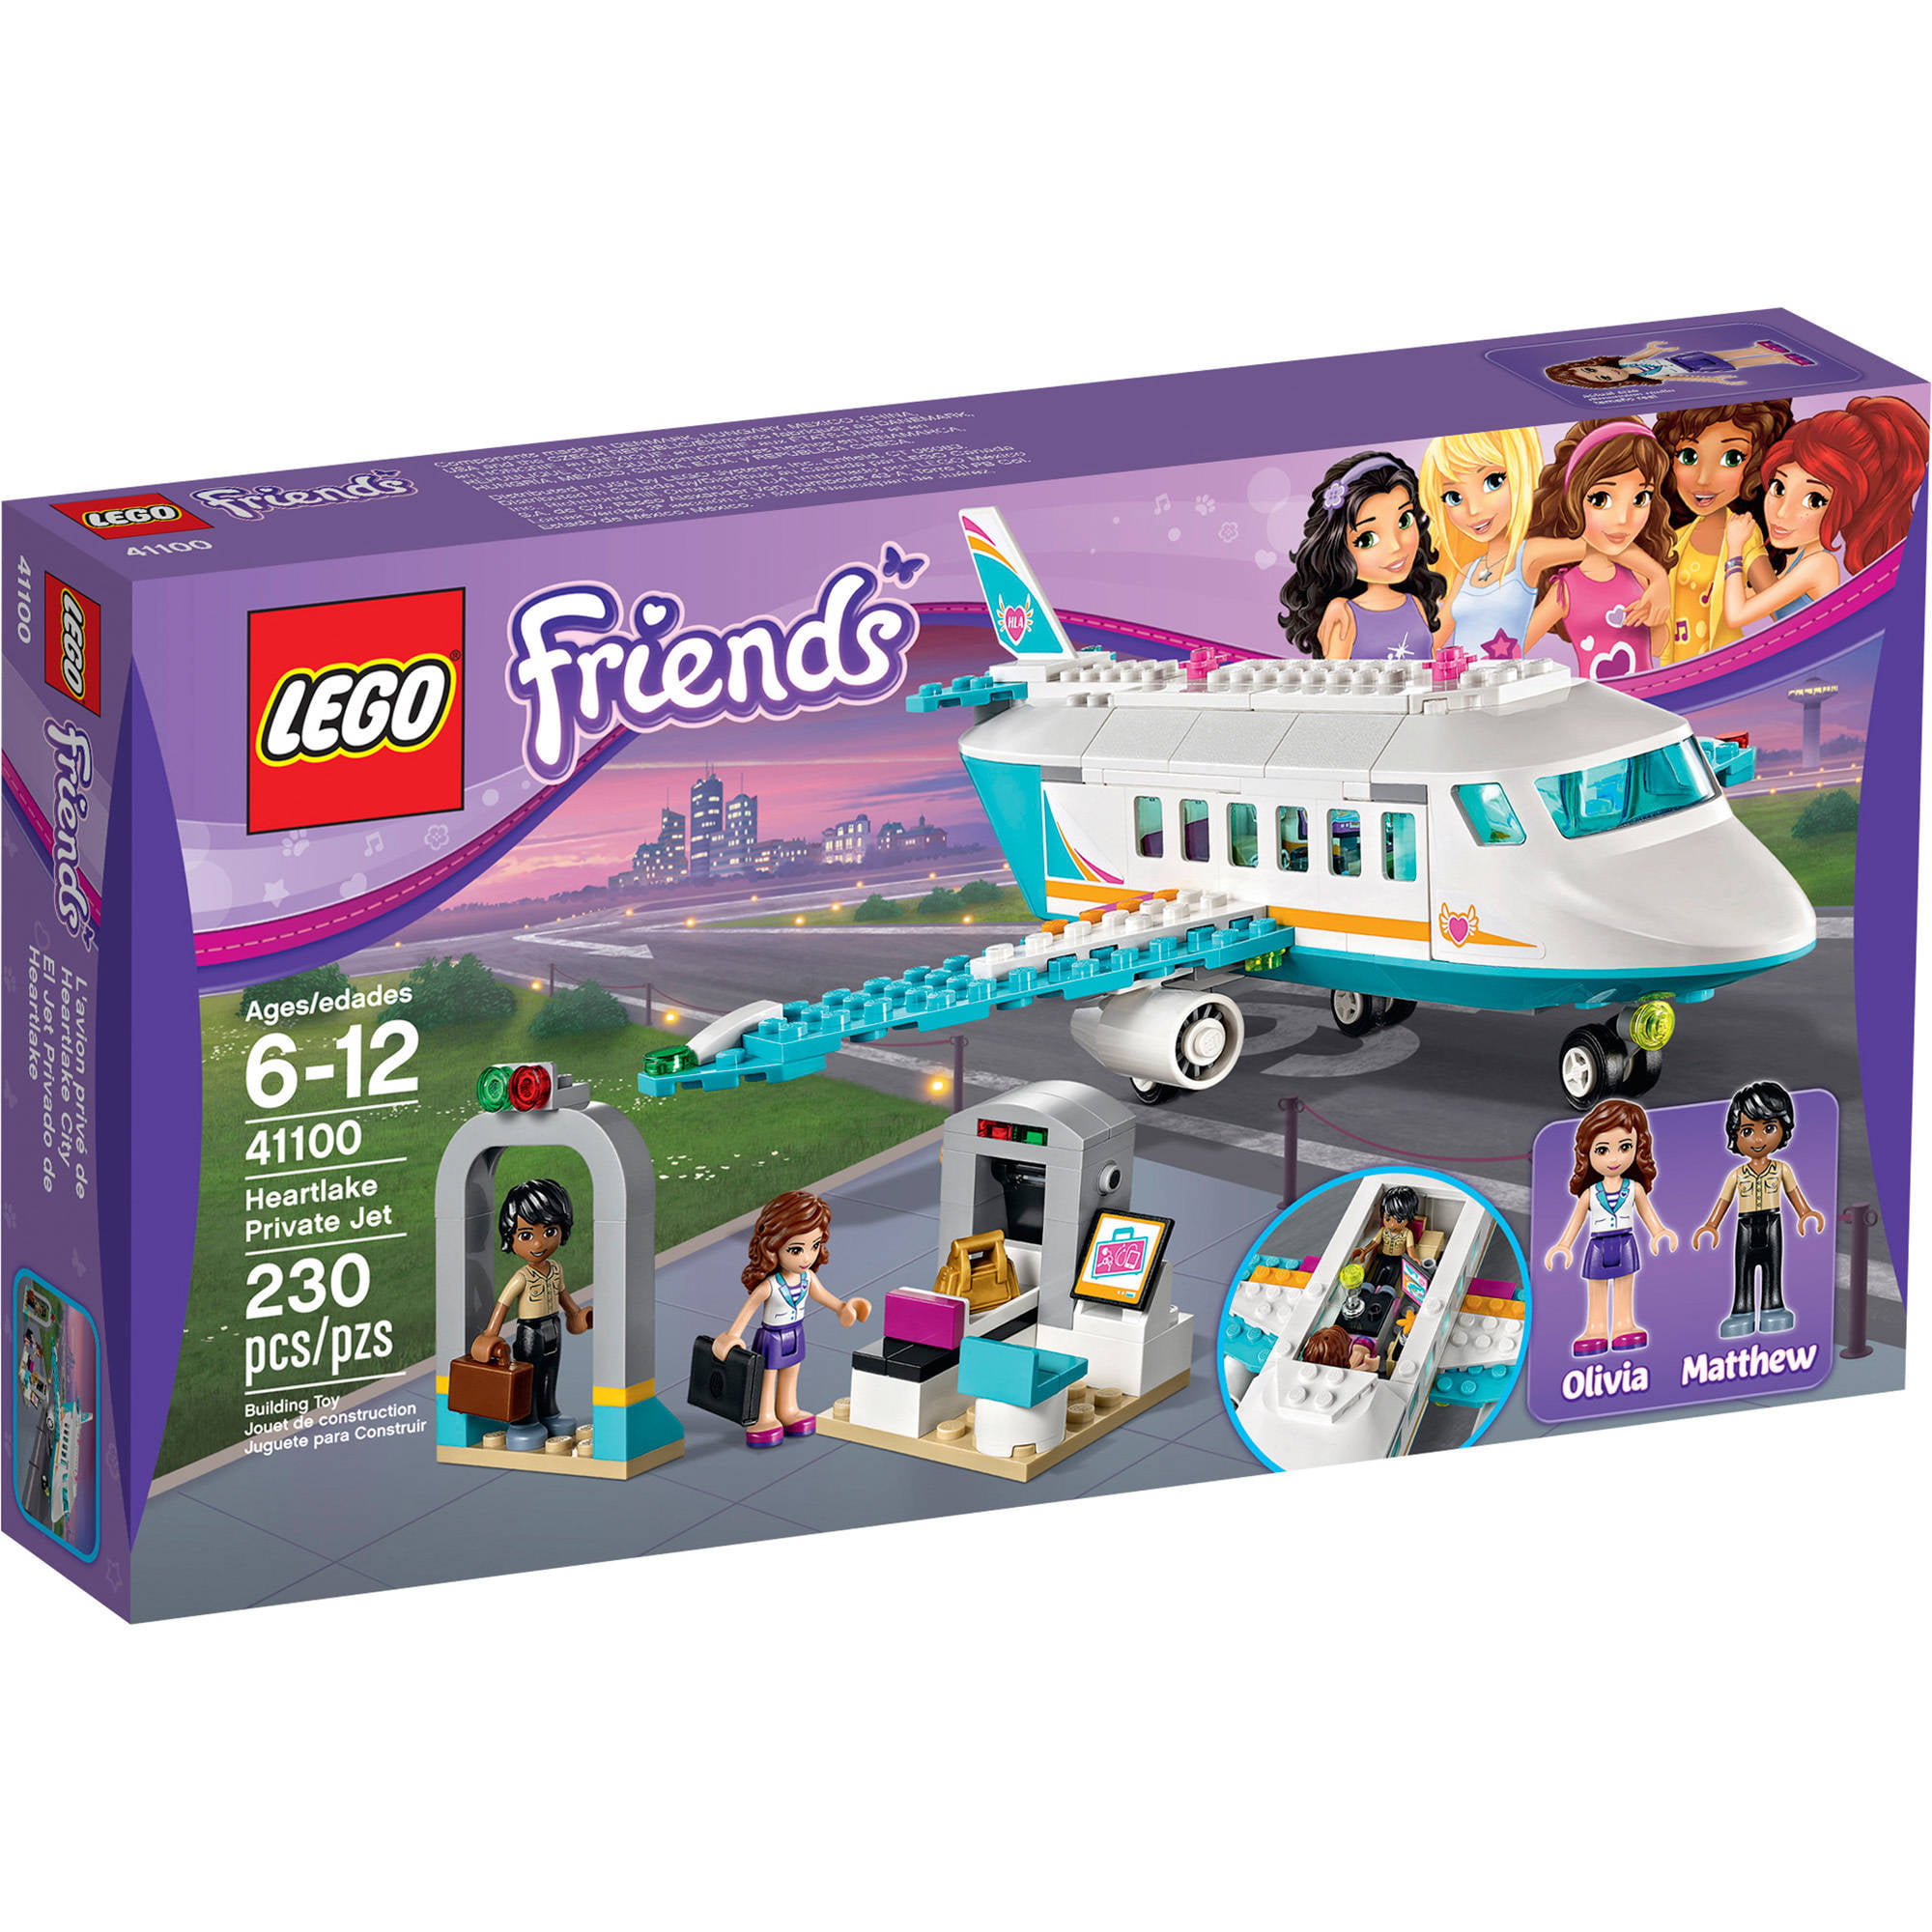 lego friends airplane